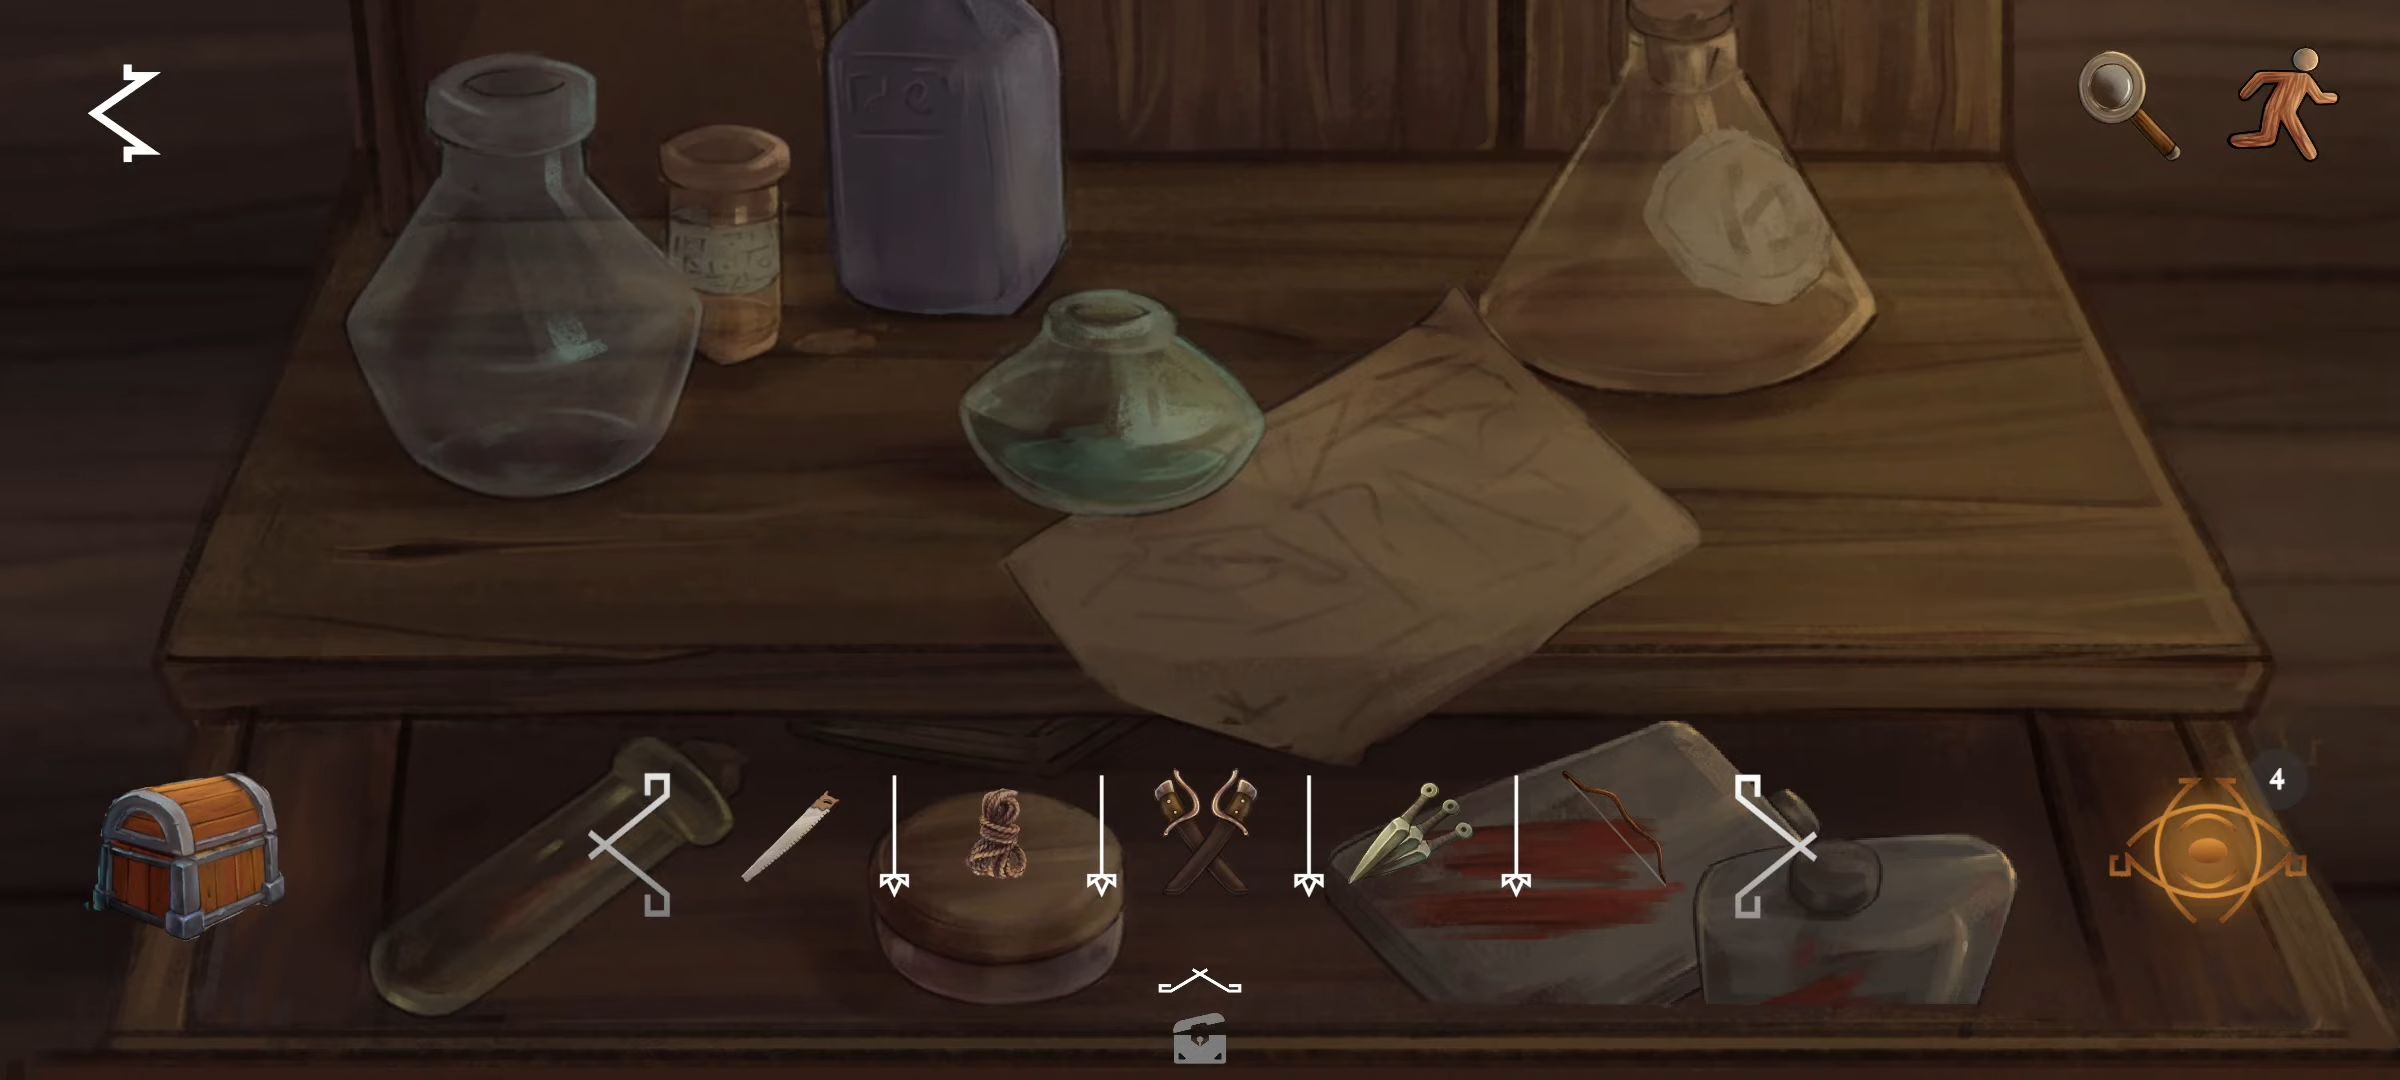 Django - Puzzle Adventure Game - Android game screenshots.